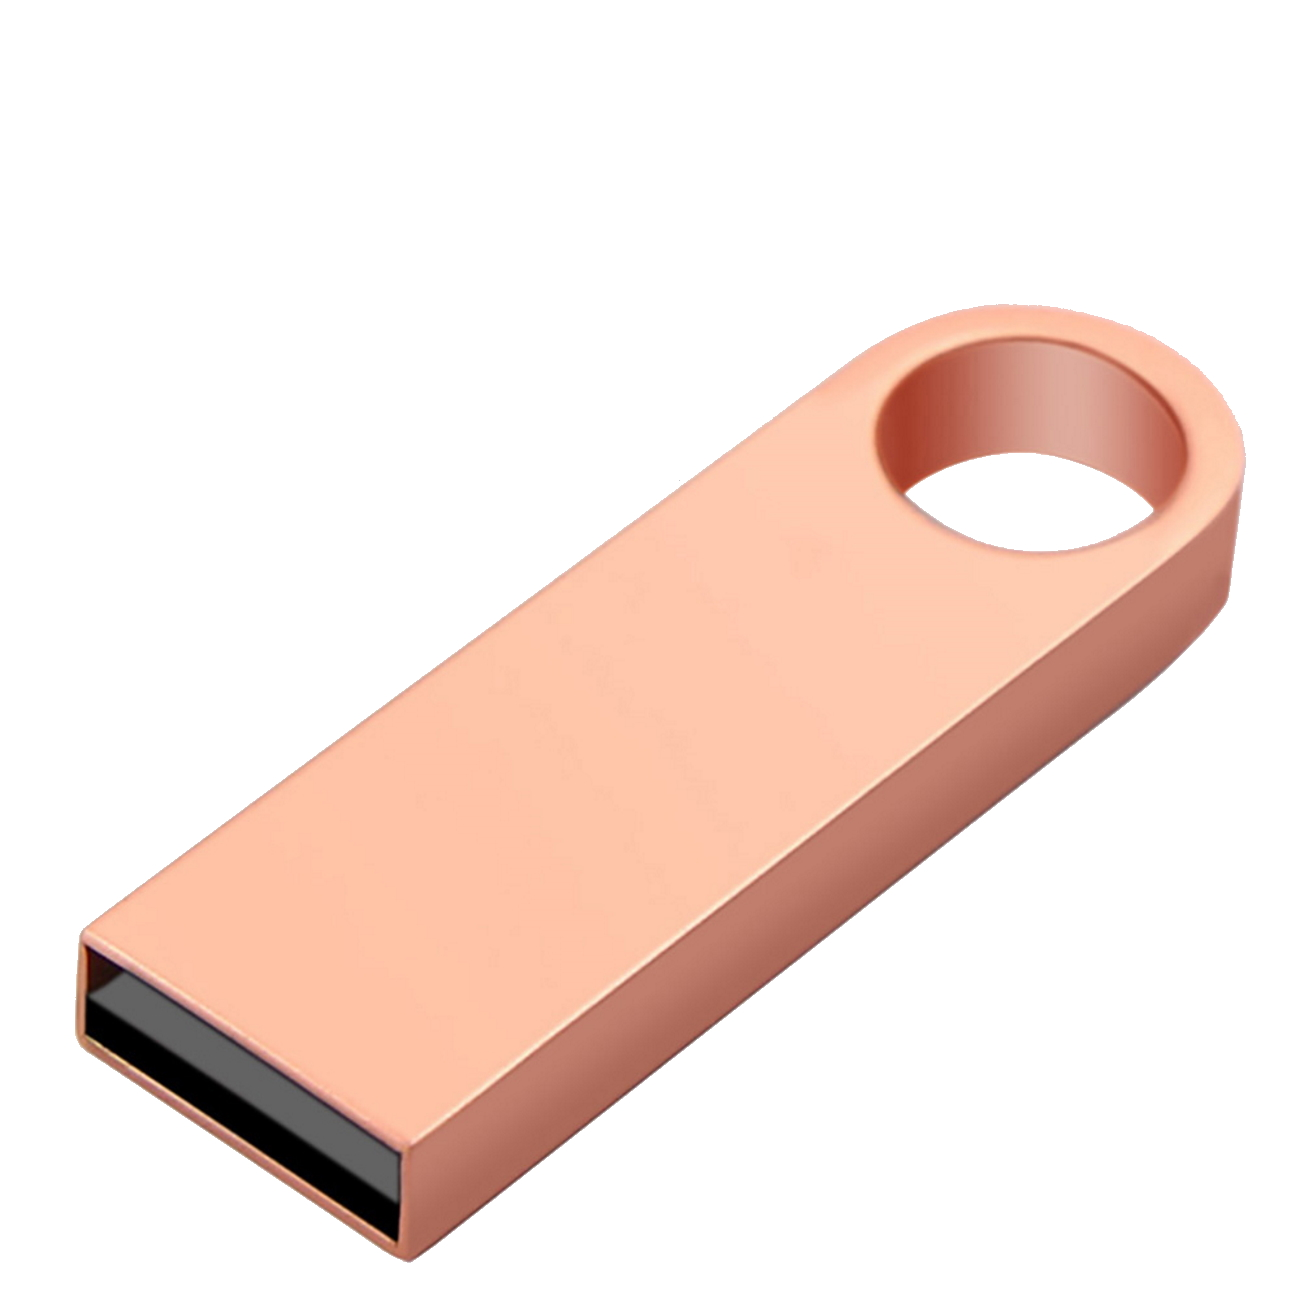 USB GERMANY ® GB) 64 SE09 (Rosegold, USB-Stick